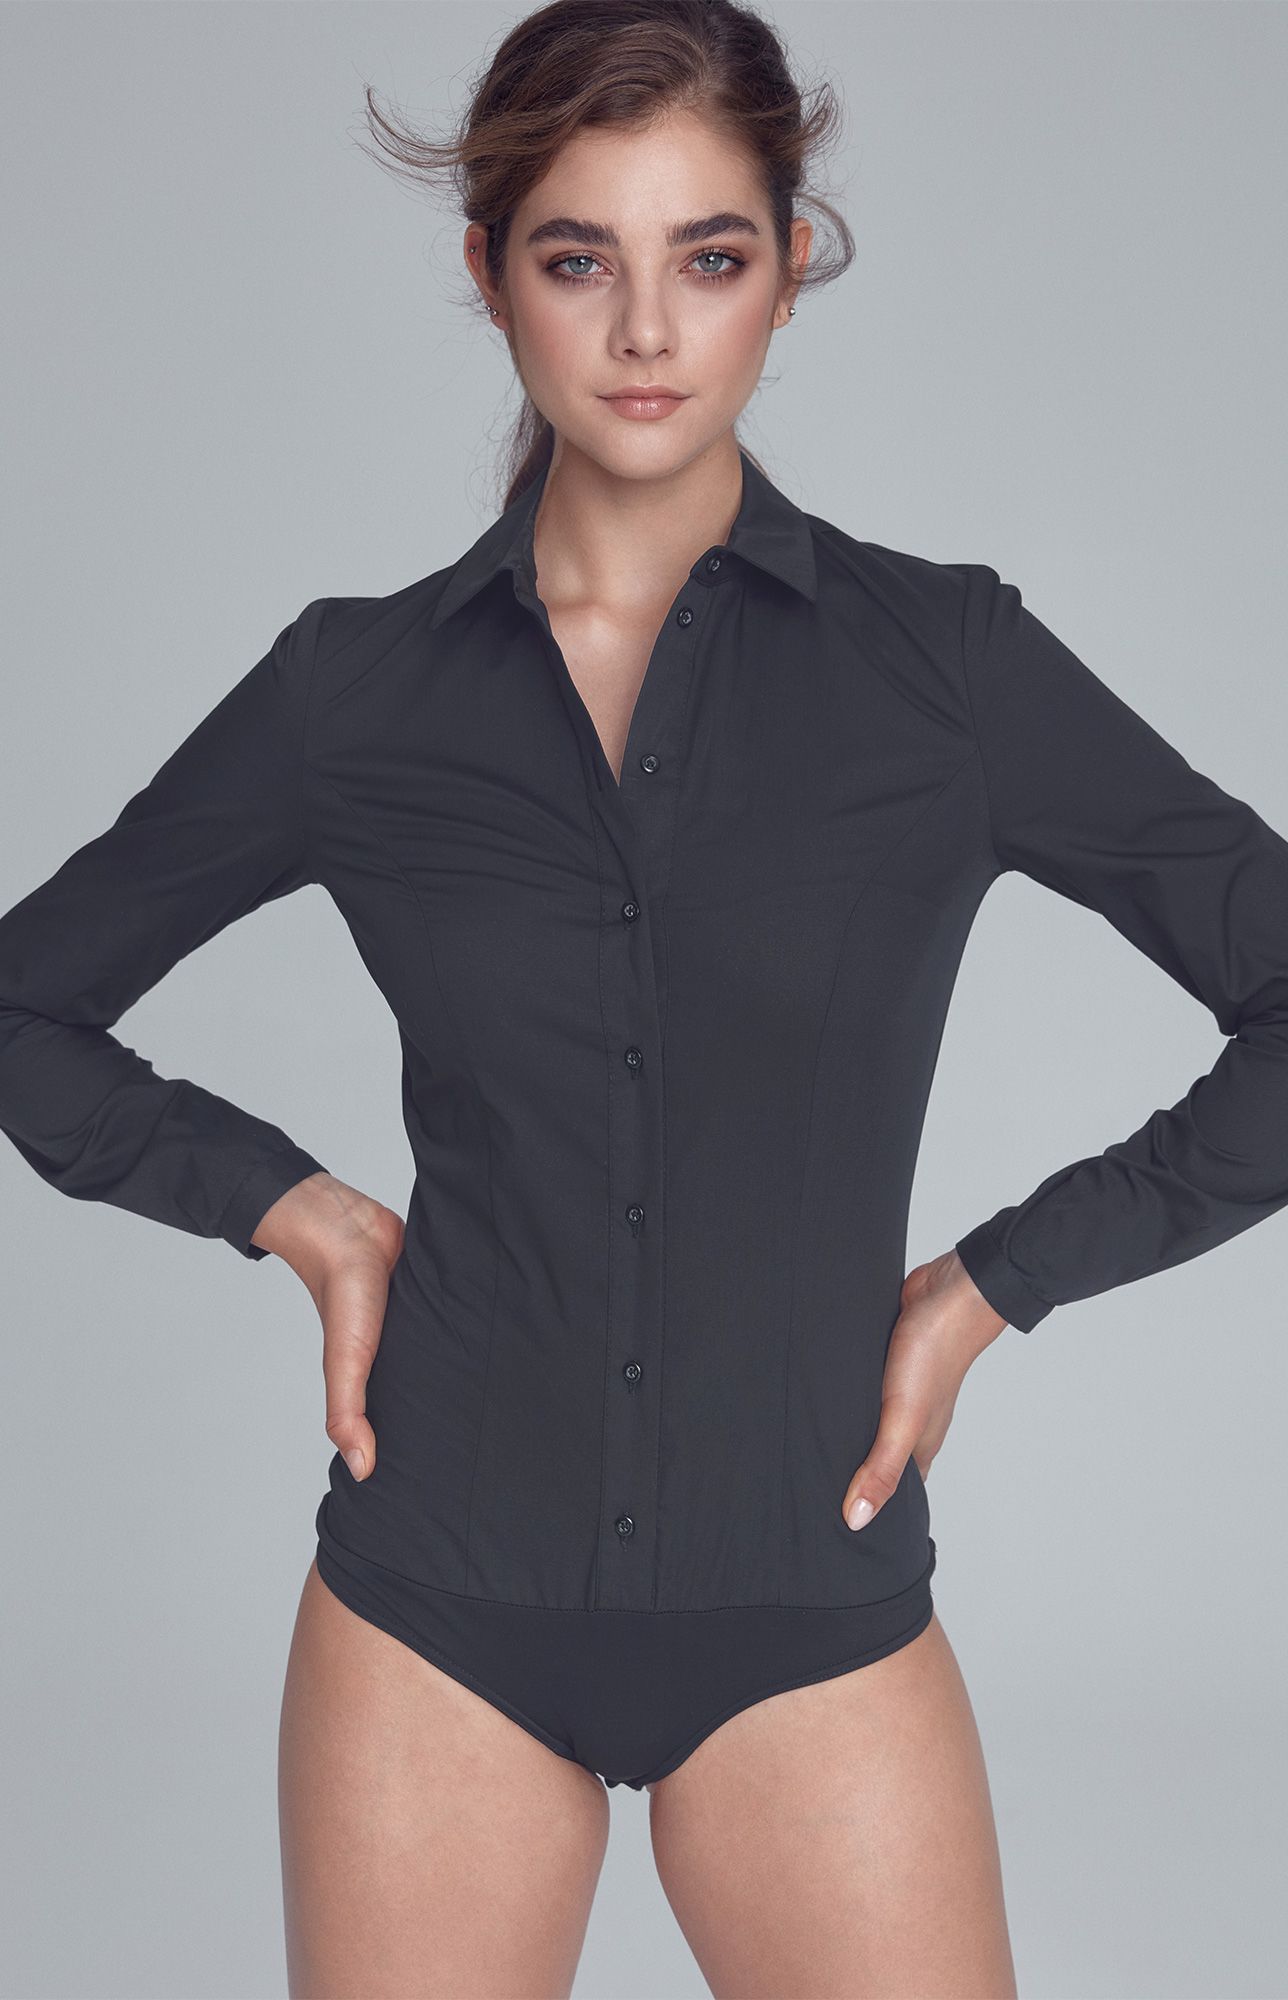 Black bodysuit blouse